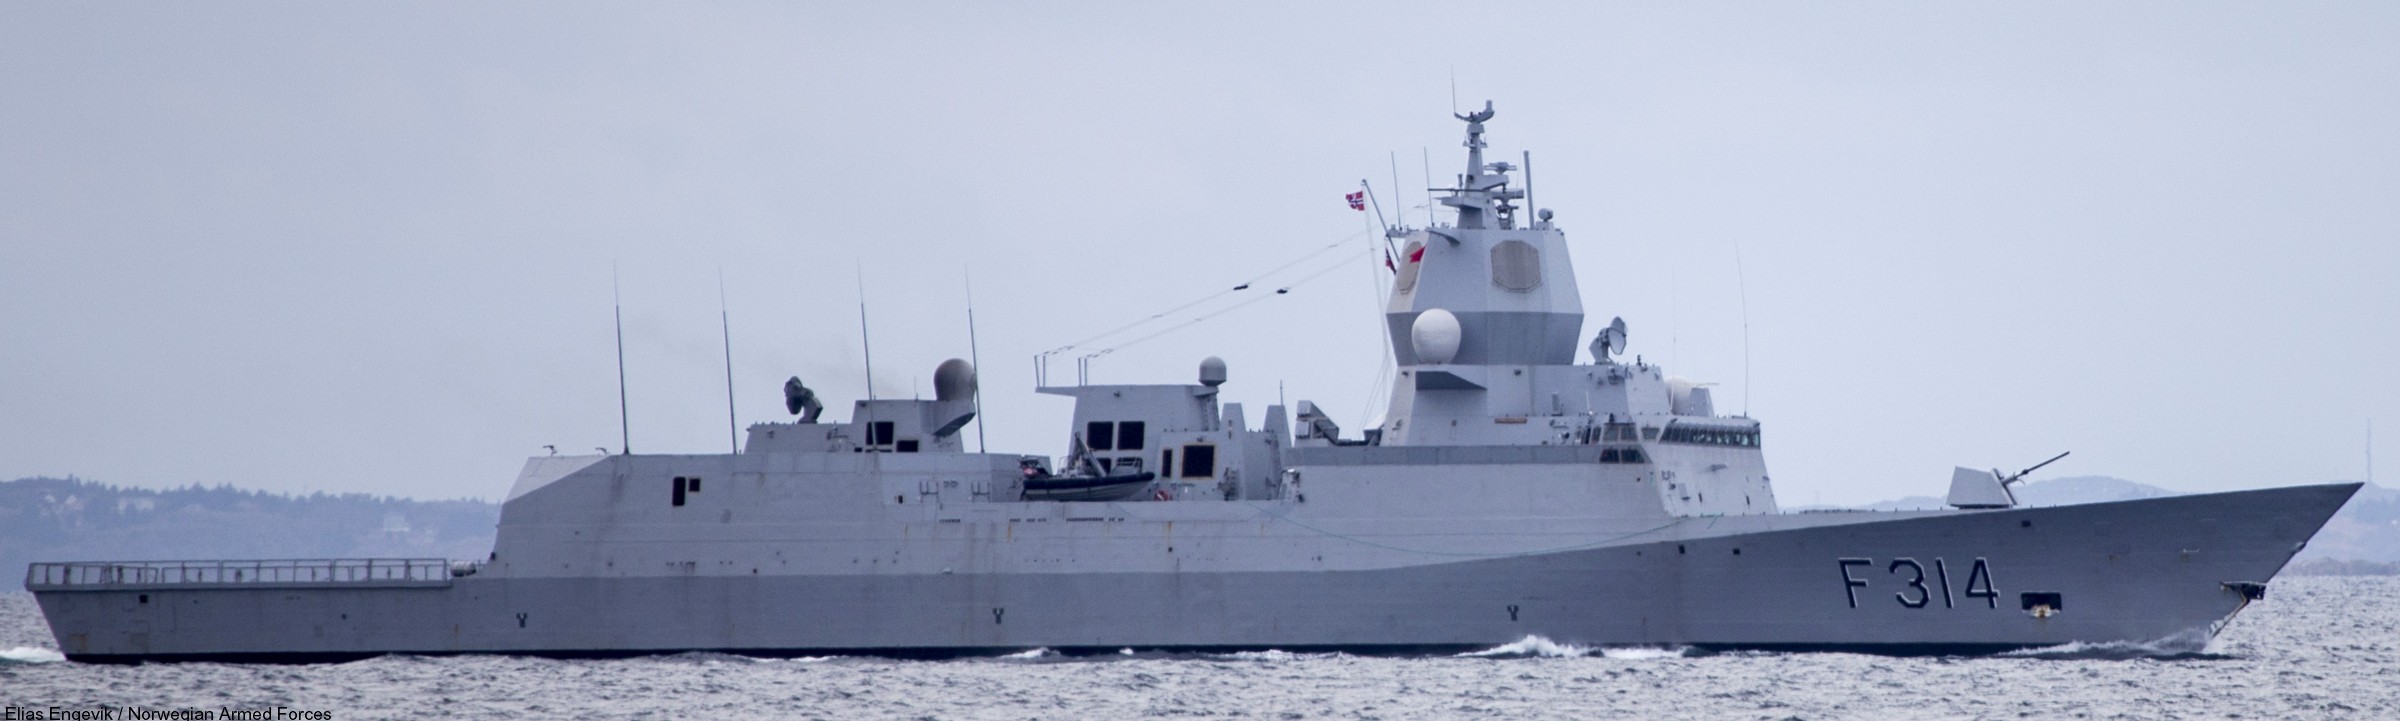 f-314 thor heyerdahl hnoms knm fridtjof nansen class frigate royal norwegian navy 25 aegis combat system